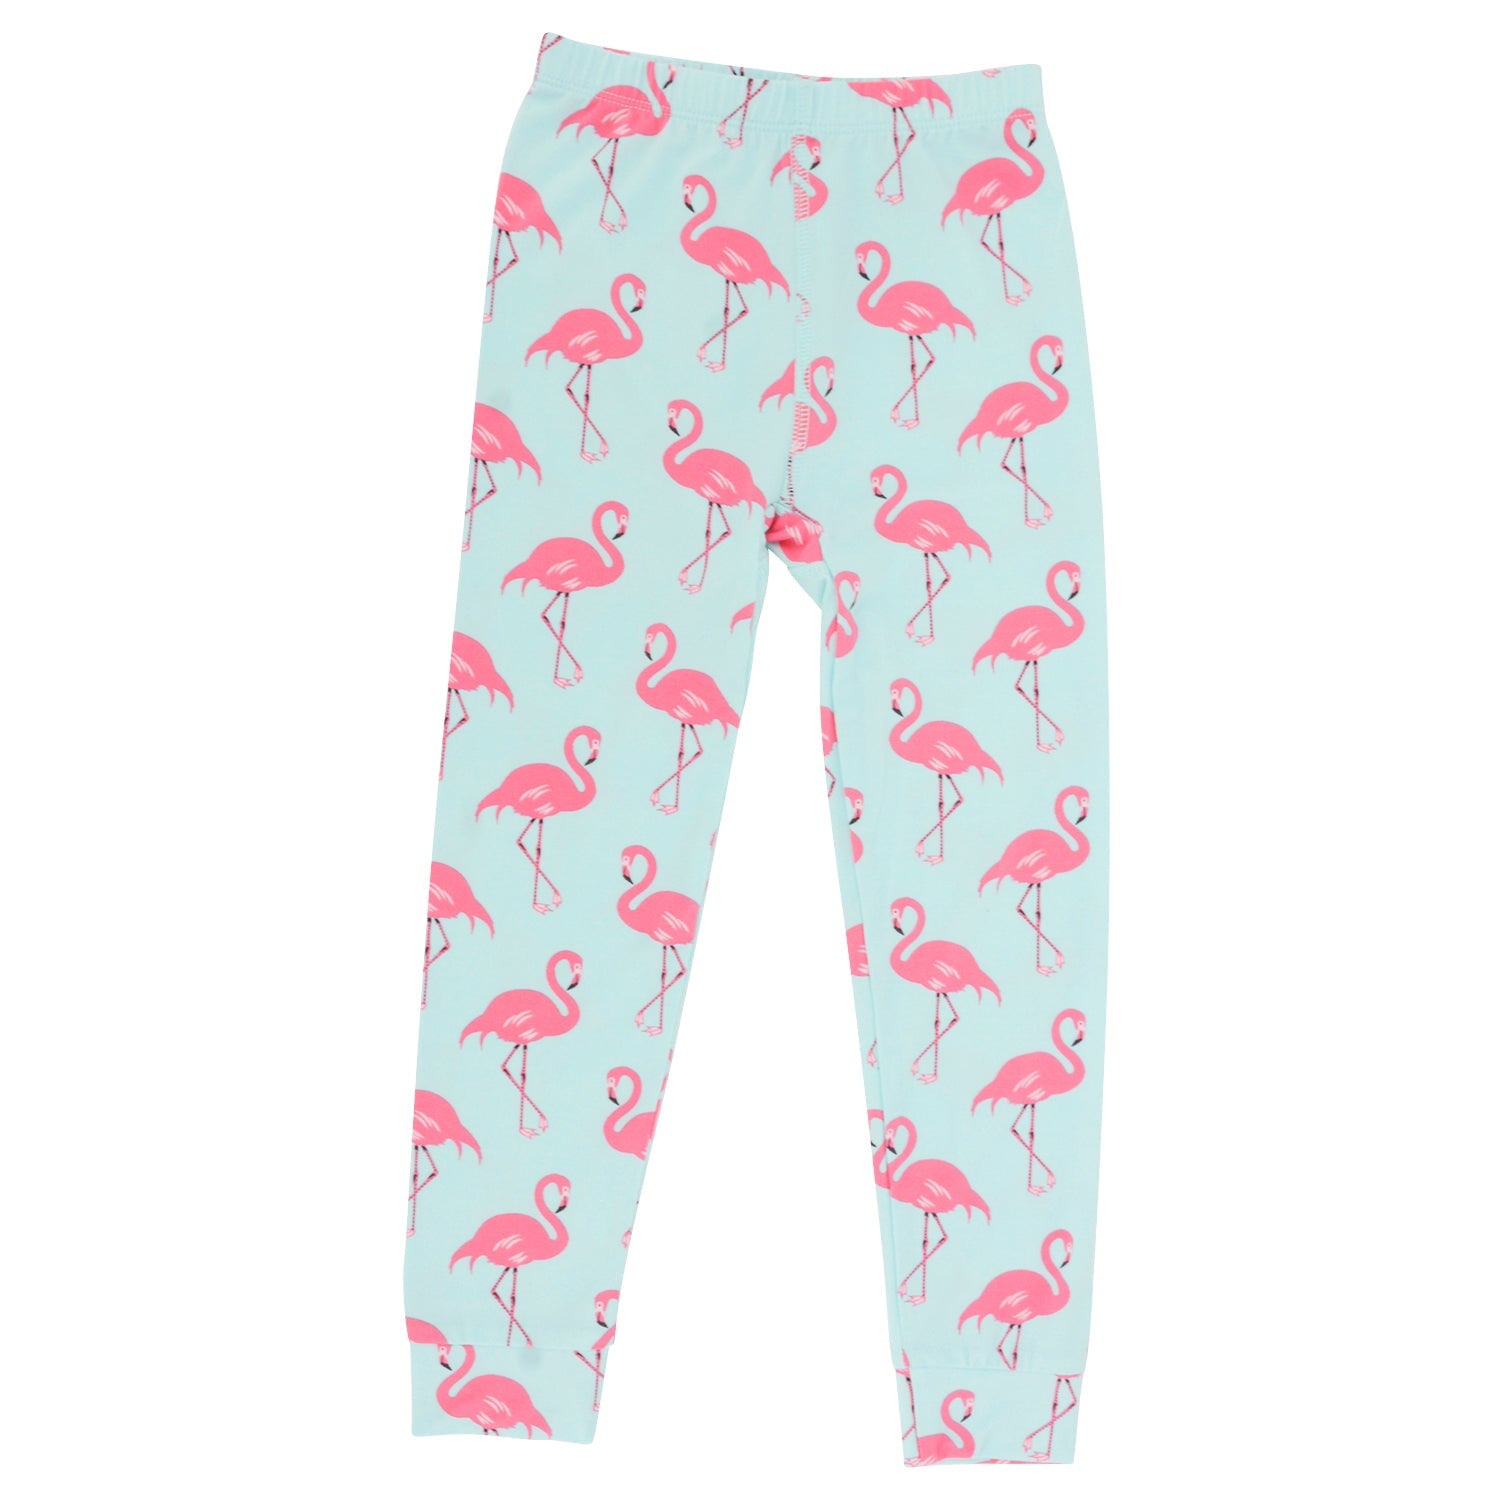 Big Kid Pajama - Flamingo Aqua